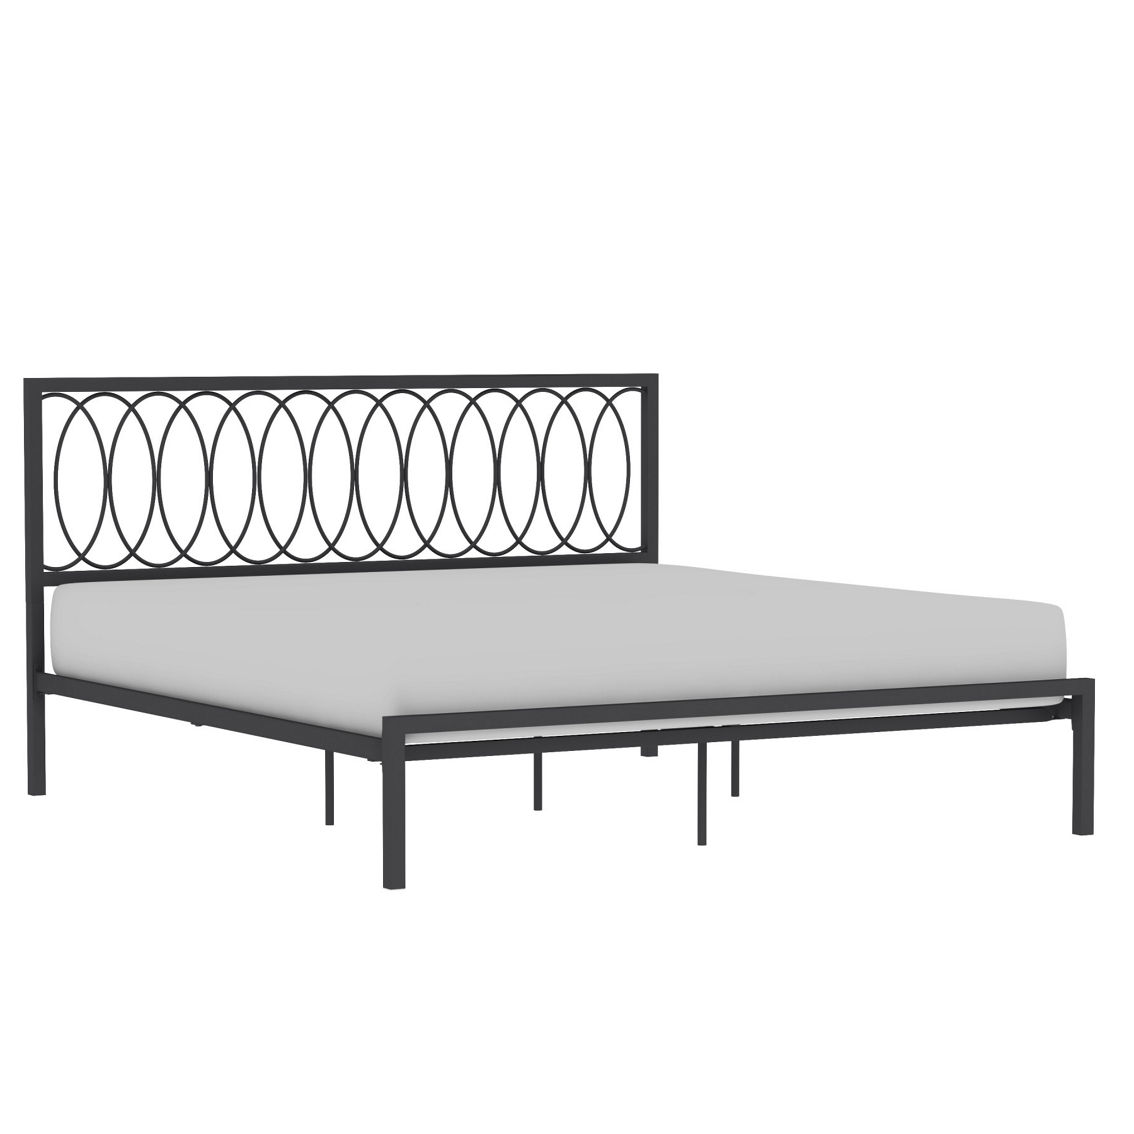 Hillsdale Furniture Naomi Metal Bed - Image 2 of 5